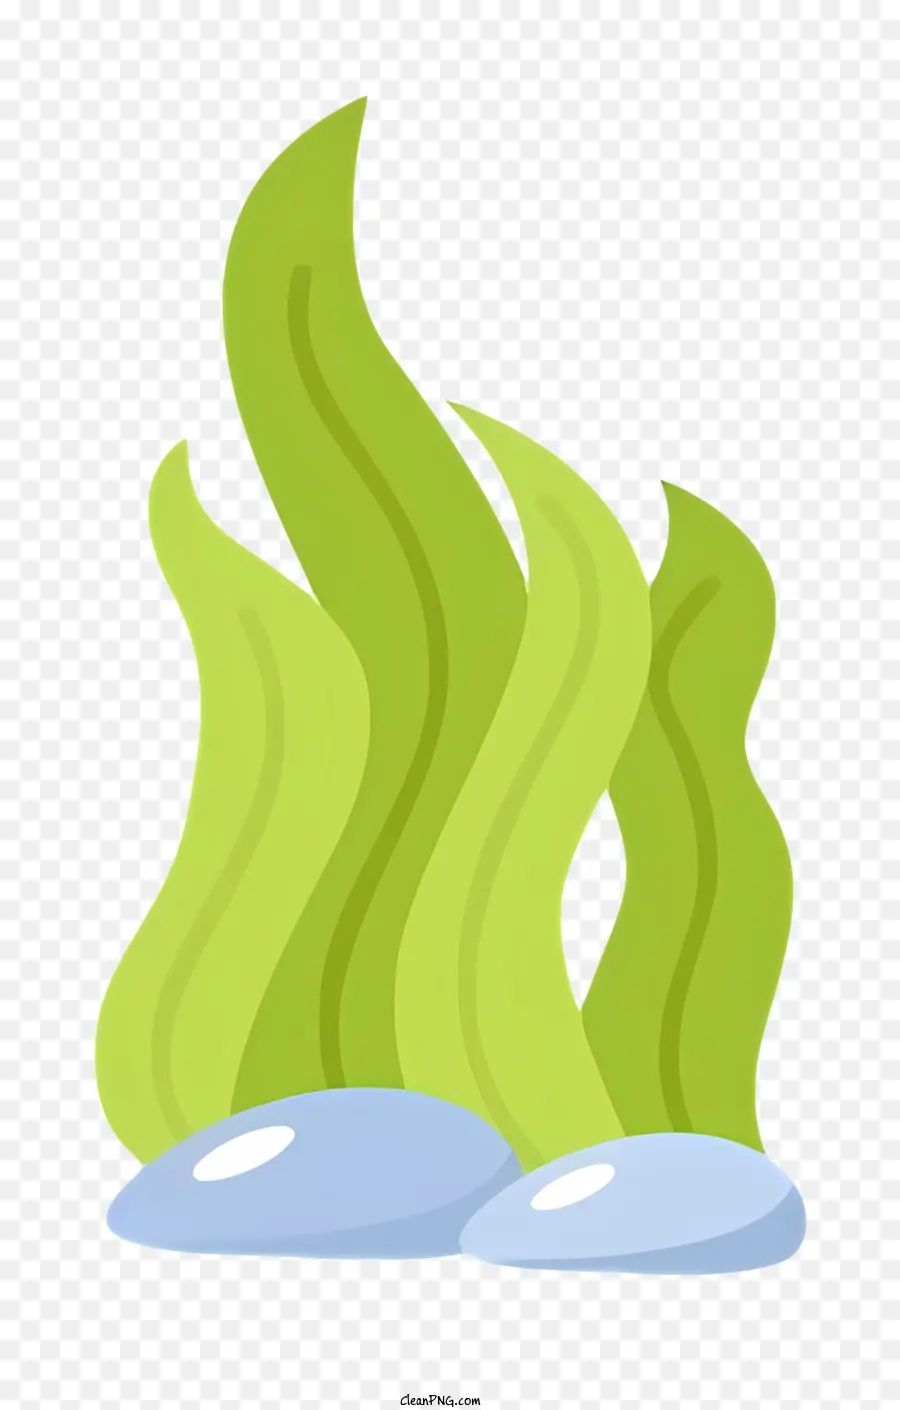 Cartoongrüne Flamme glühend feuerschwimmende Flammen-Cartoon-ähnliche Feuer - Cartoon-Stil, schwimmende grüne Flamme mit blauem Glühen